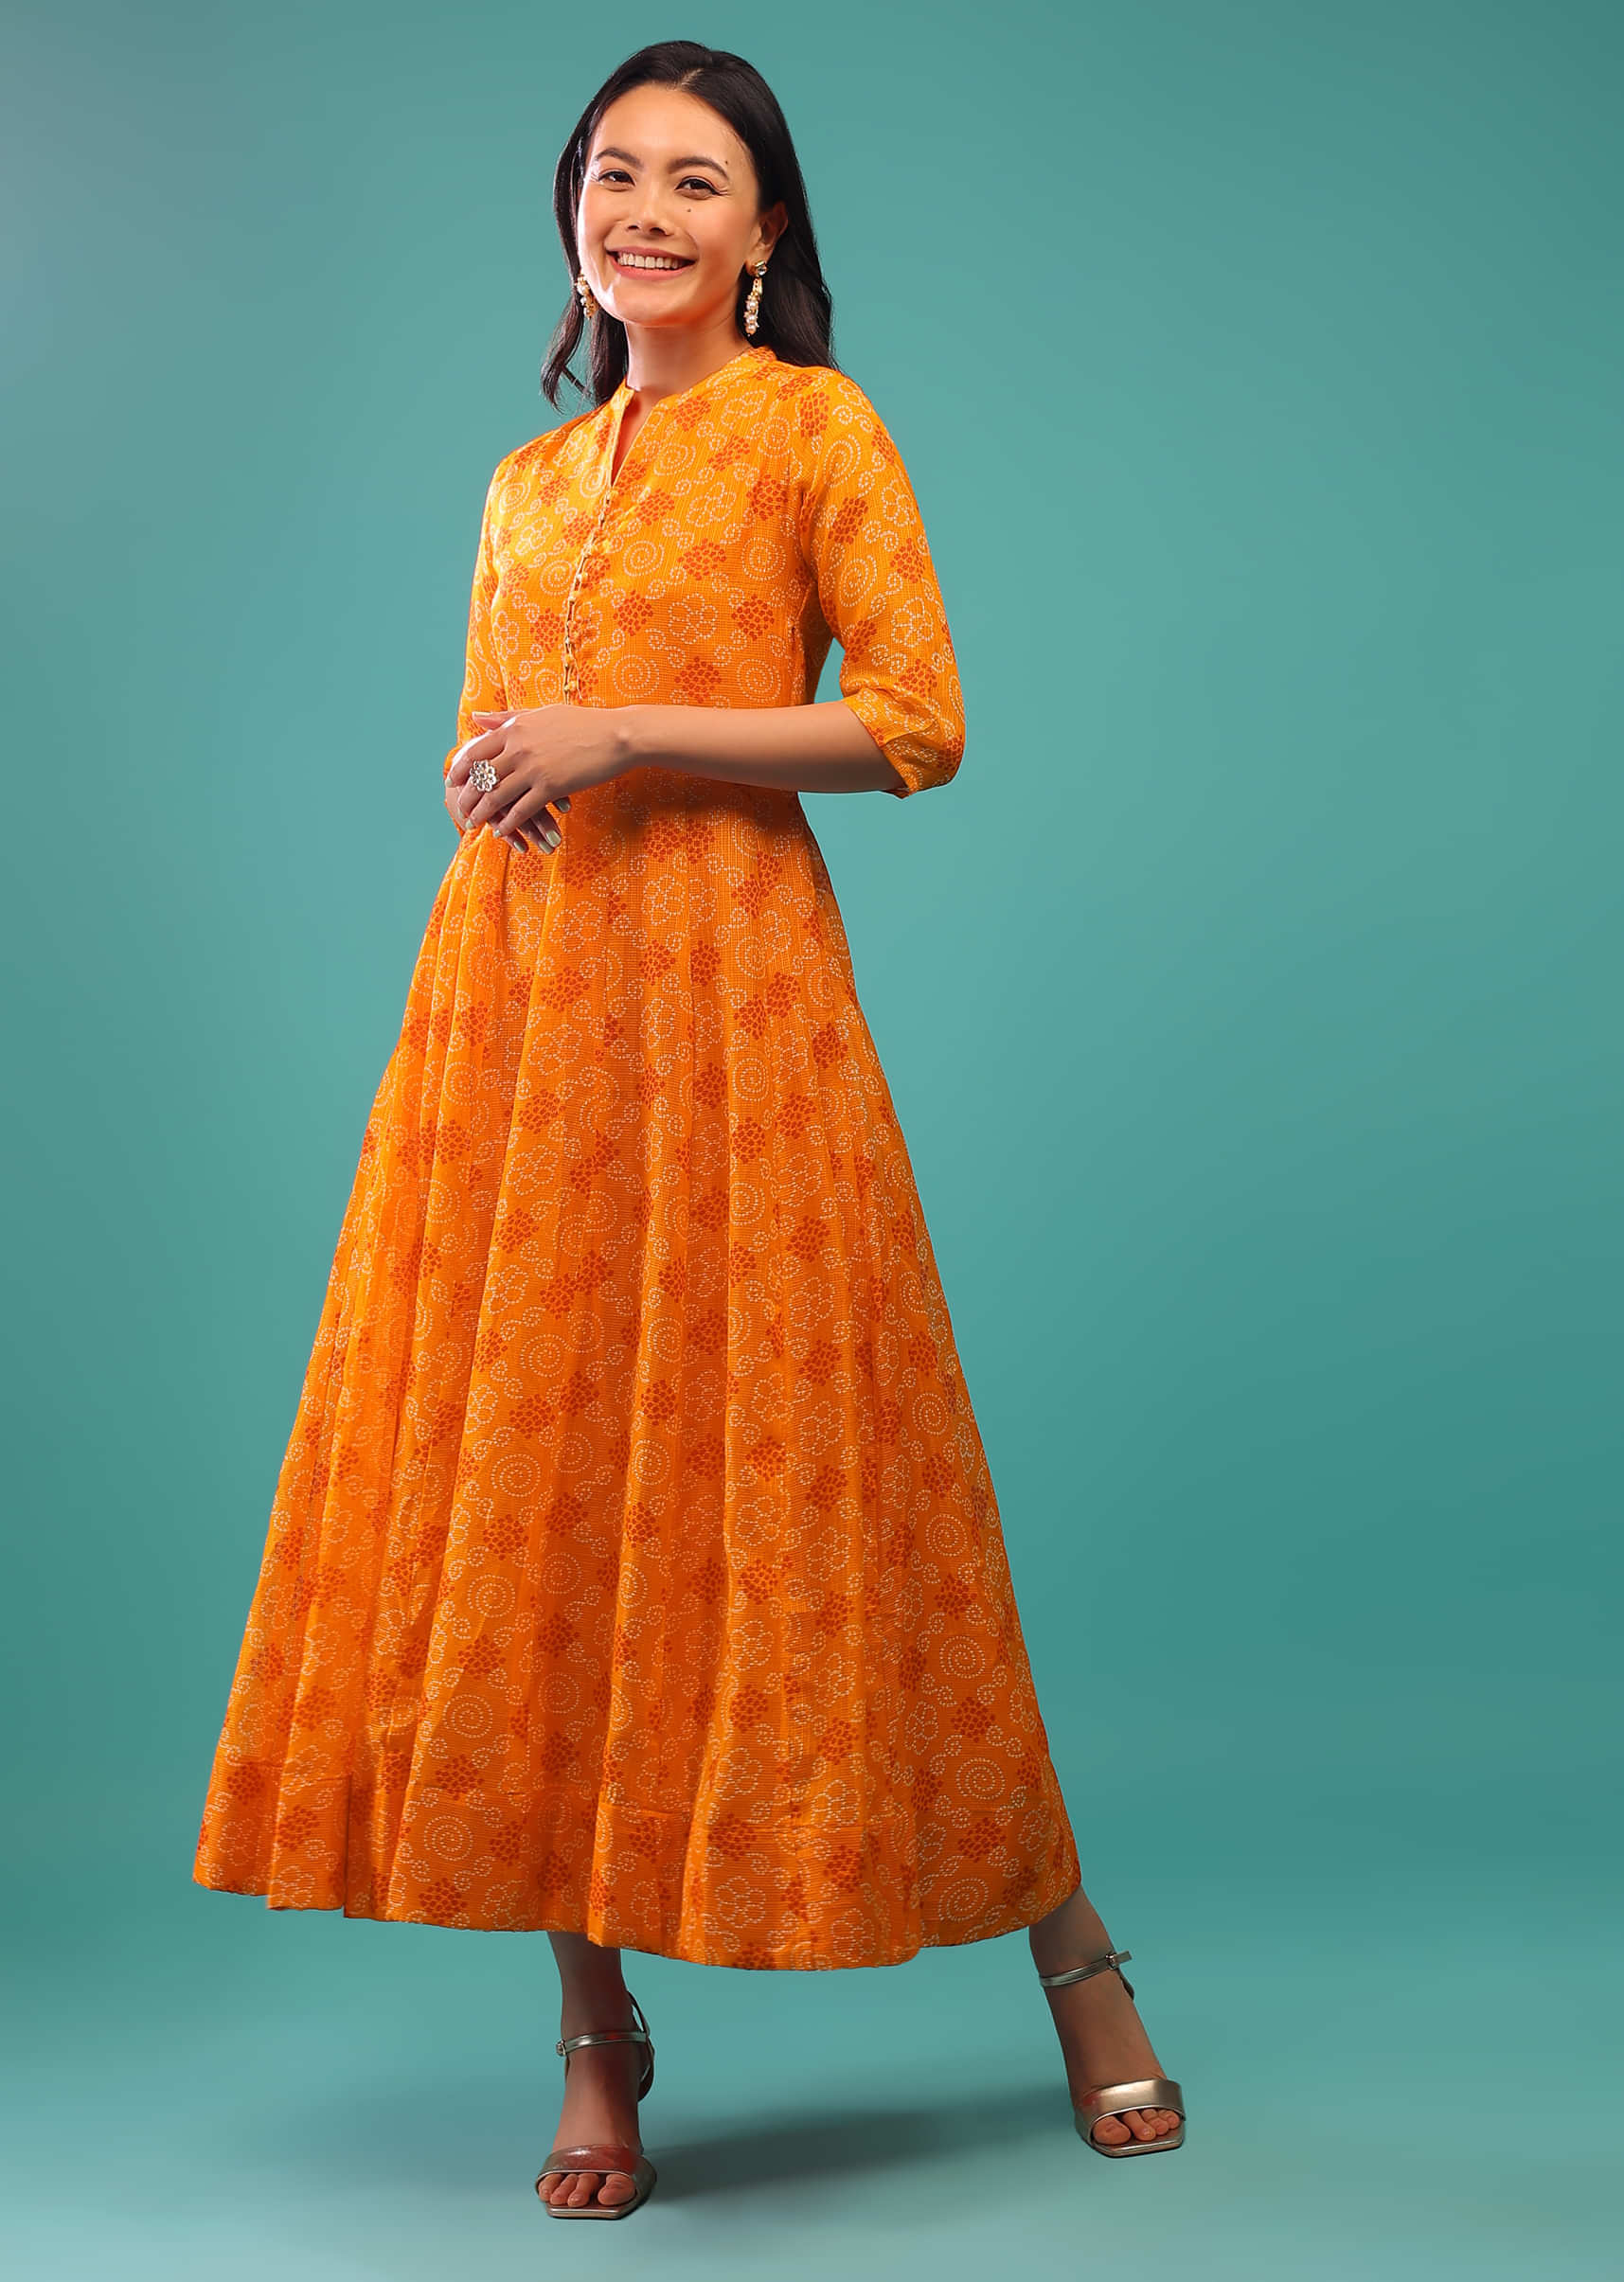 Russet Orange Indo-Western Dress With Side Zip Closure